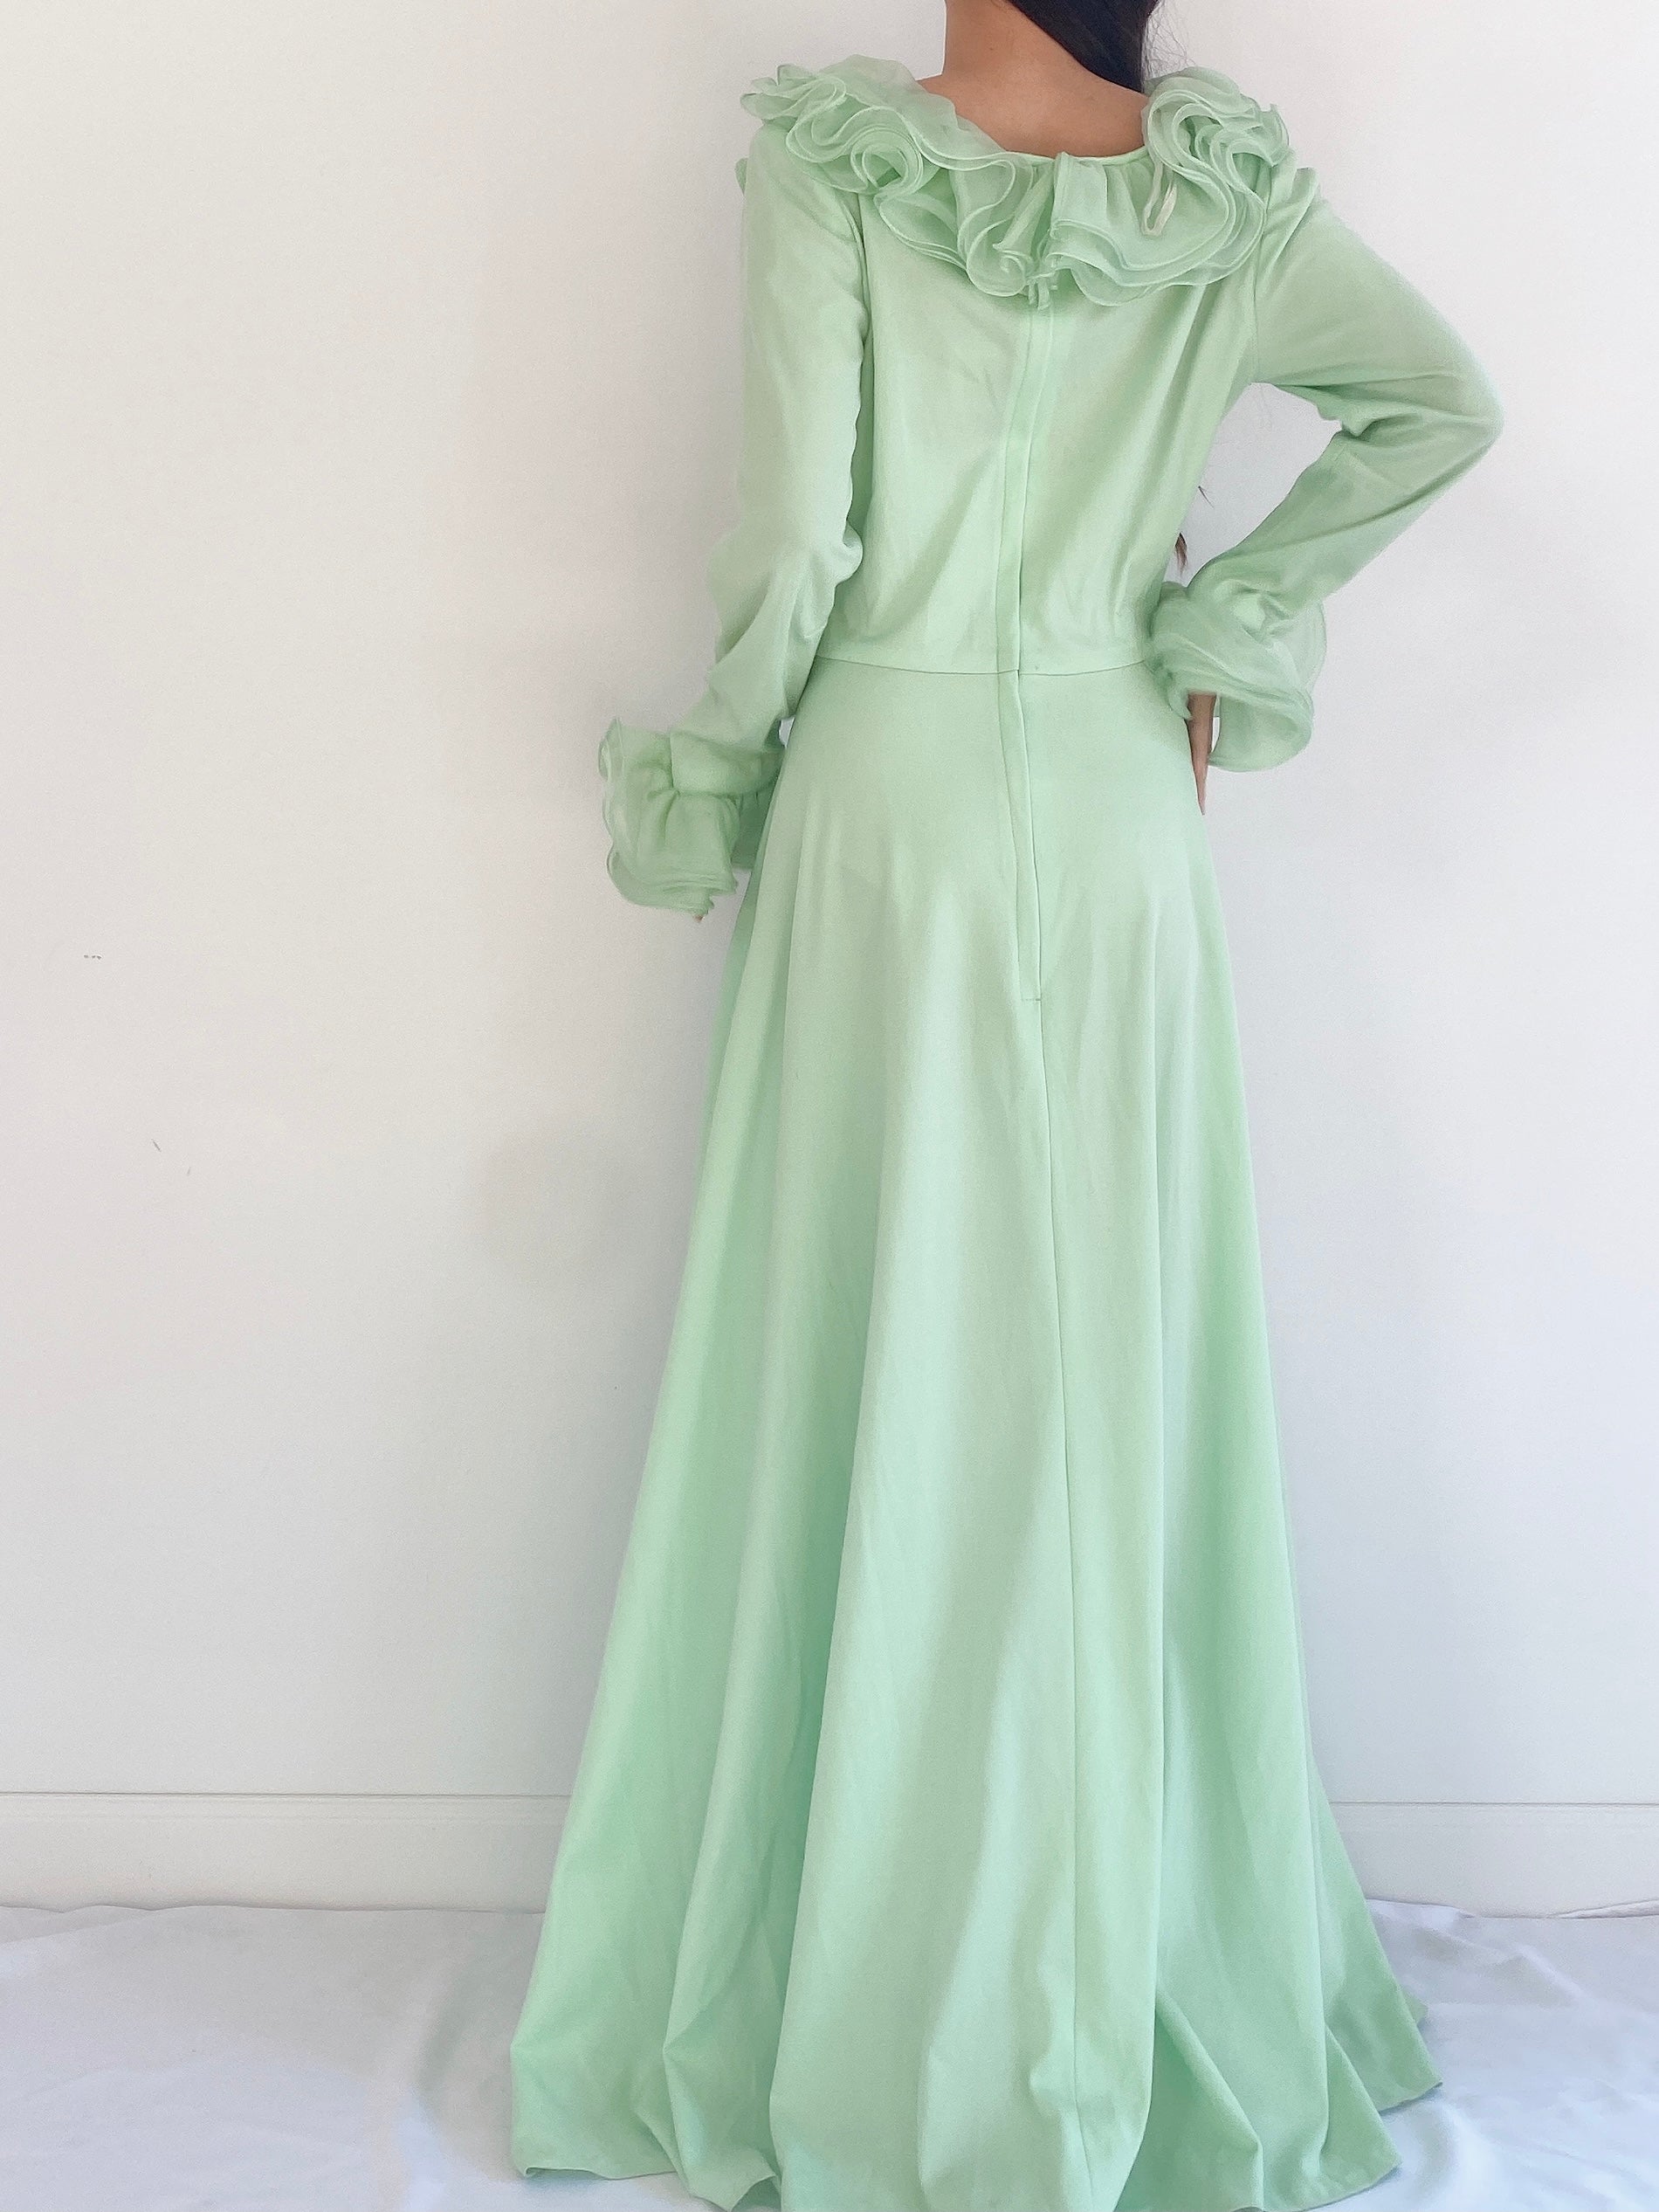 Vintage Mint Ruffle Dress - S